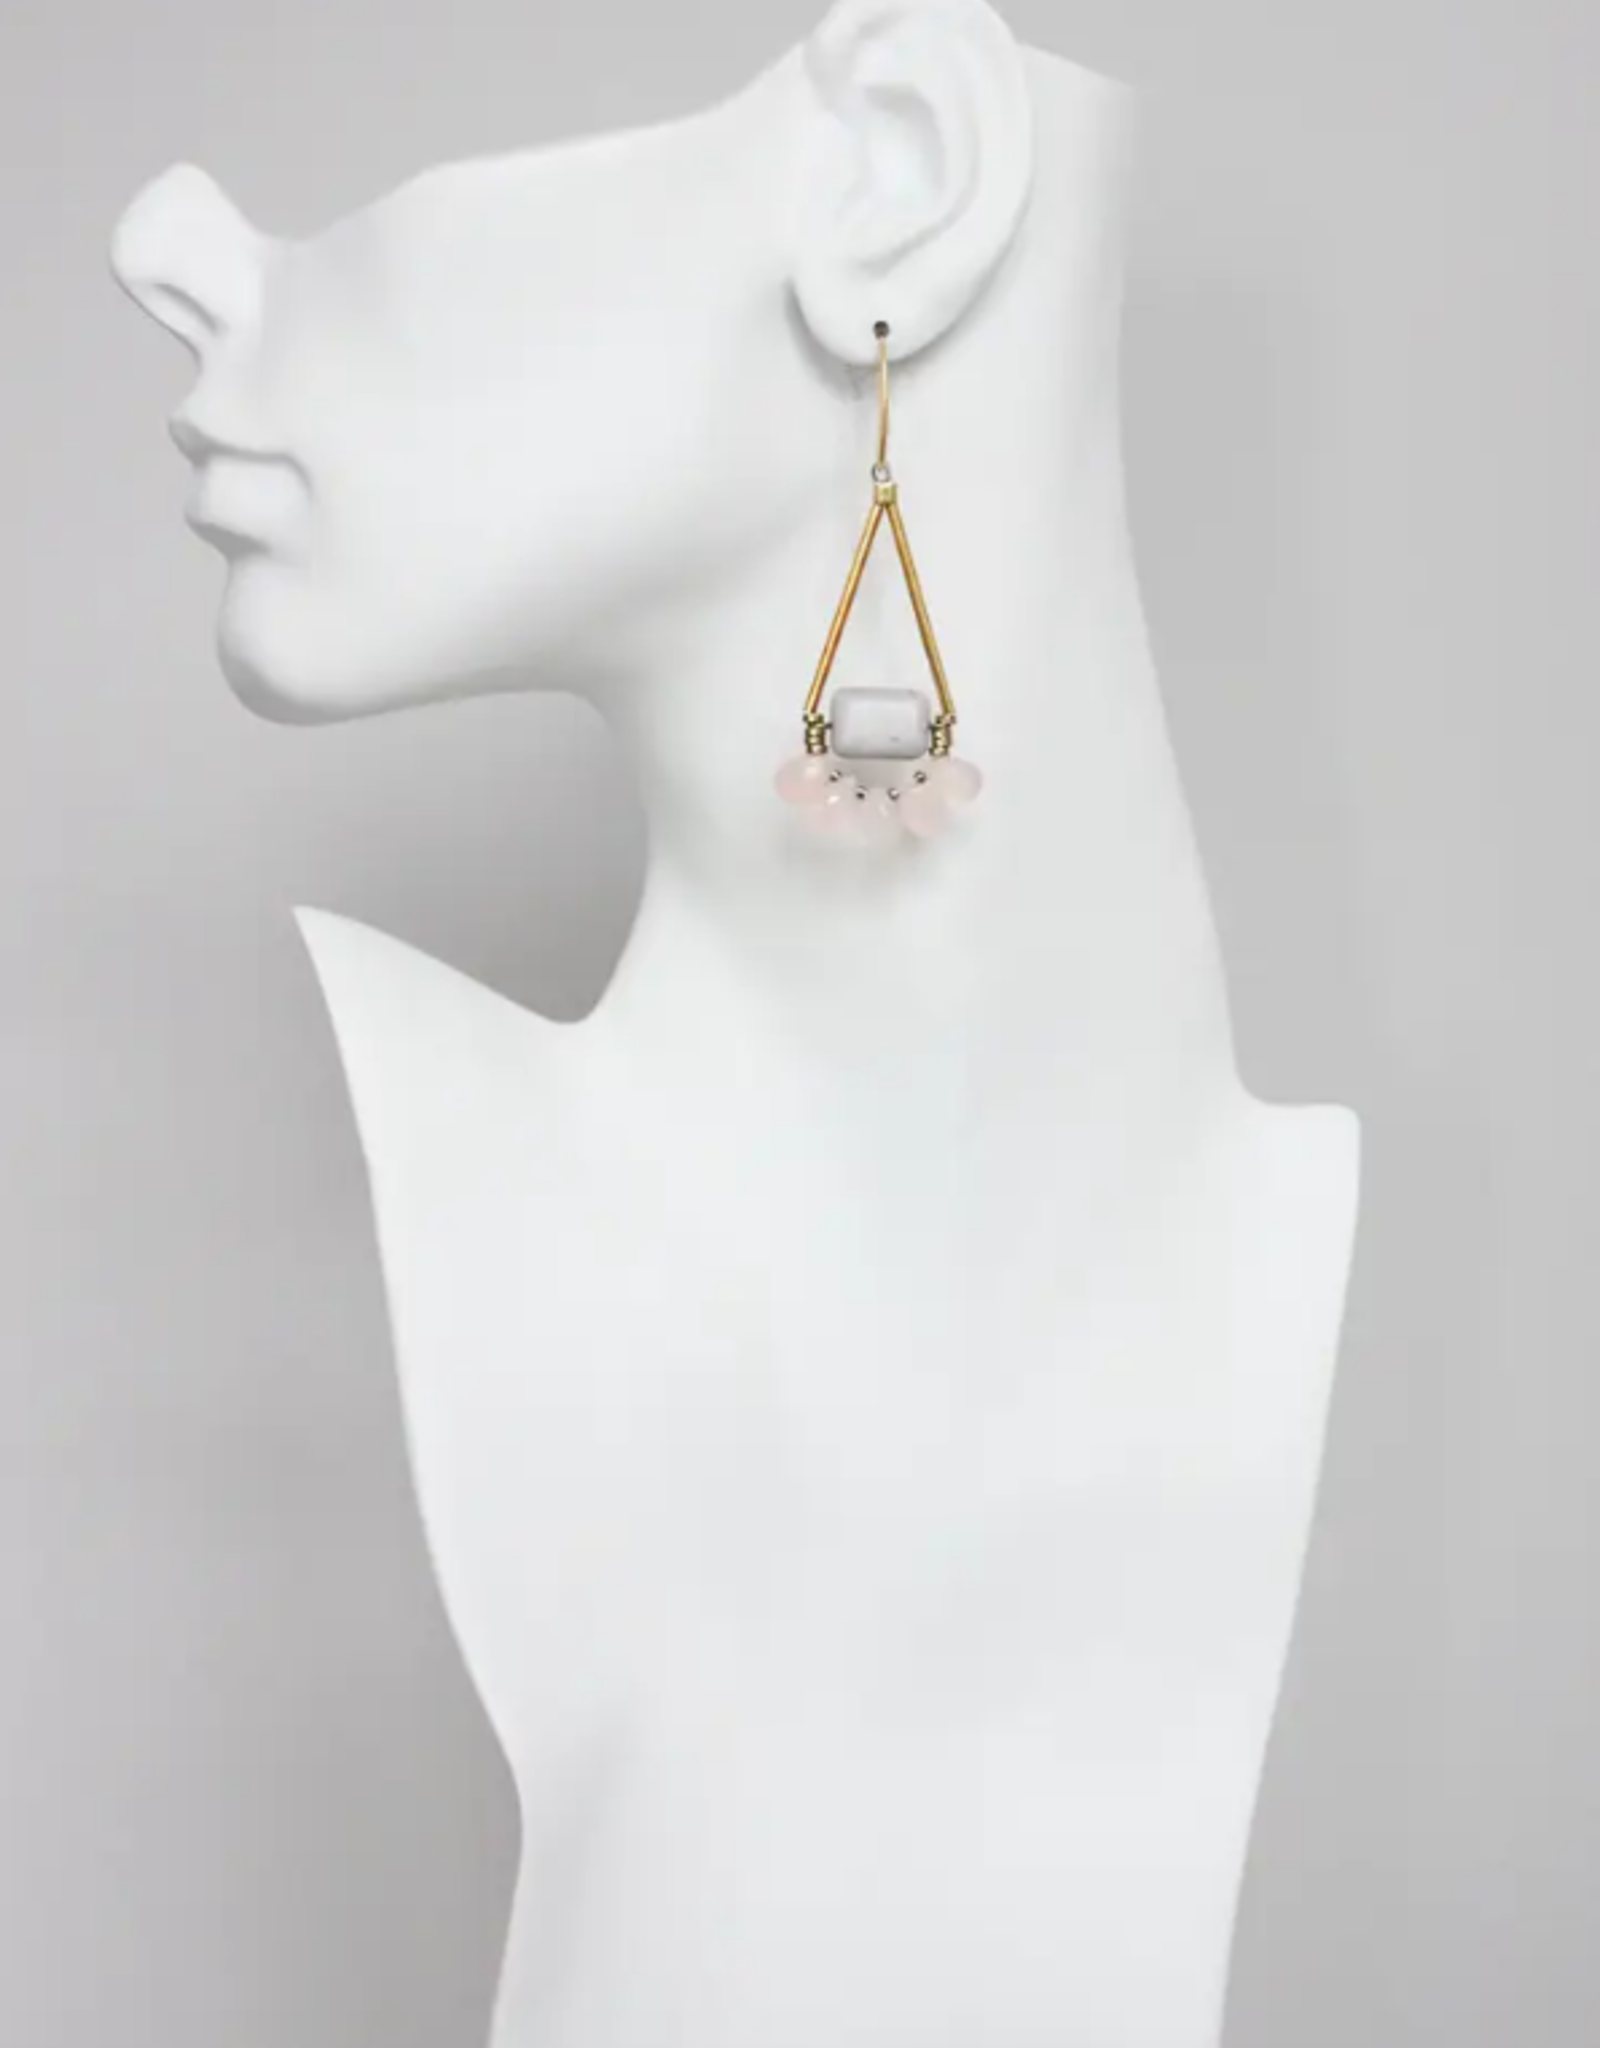 David Aubrey Earrings - Dangle: Pink and Gray Geometric